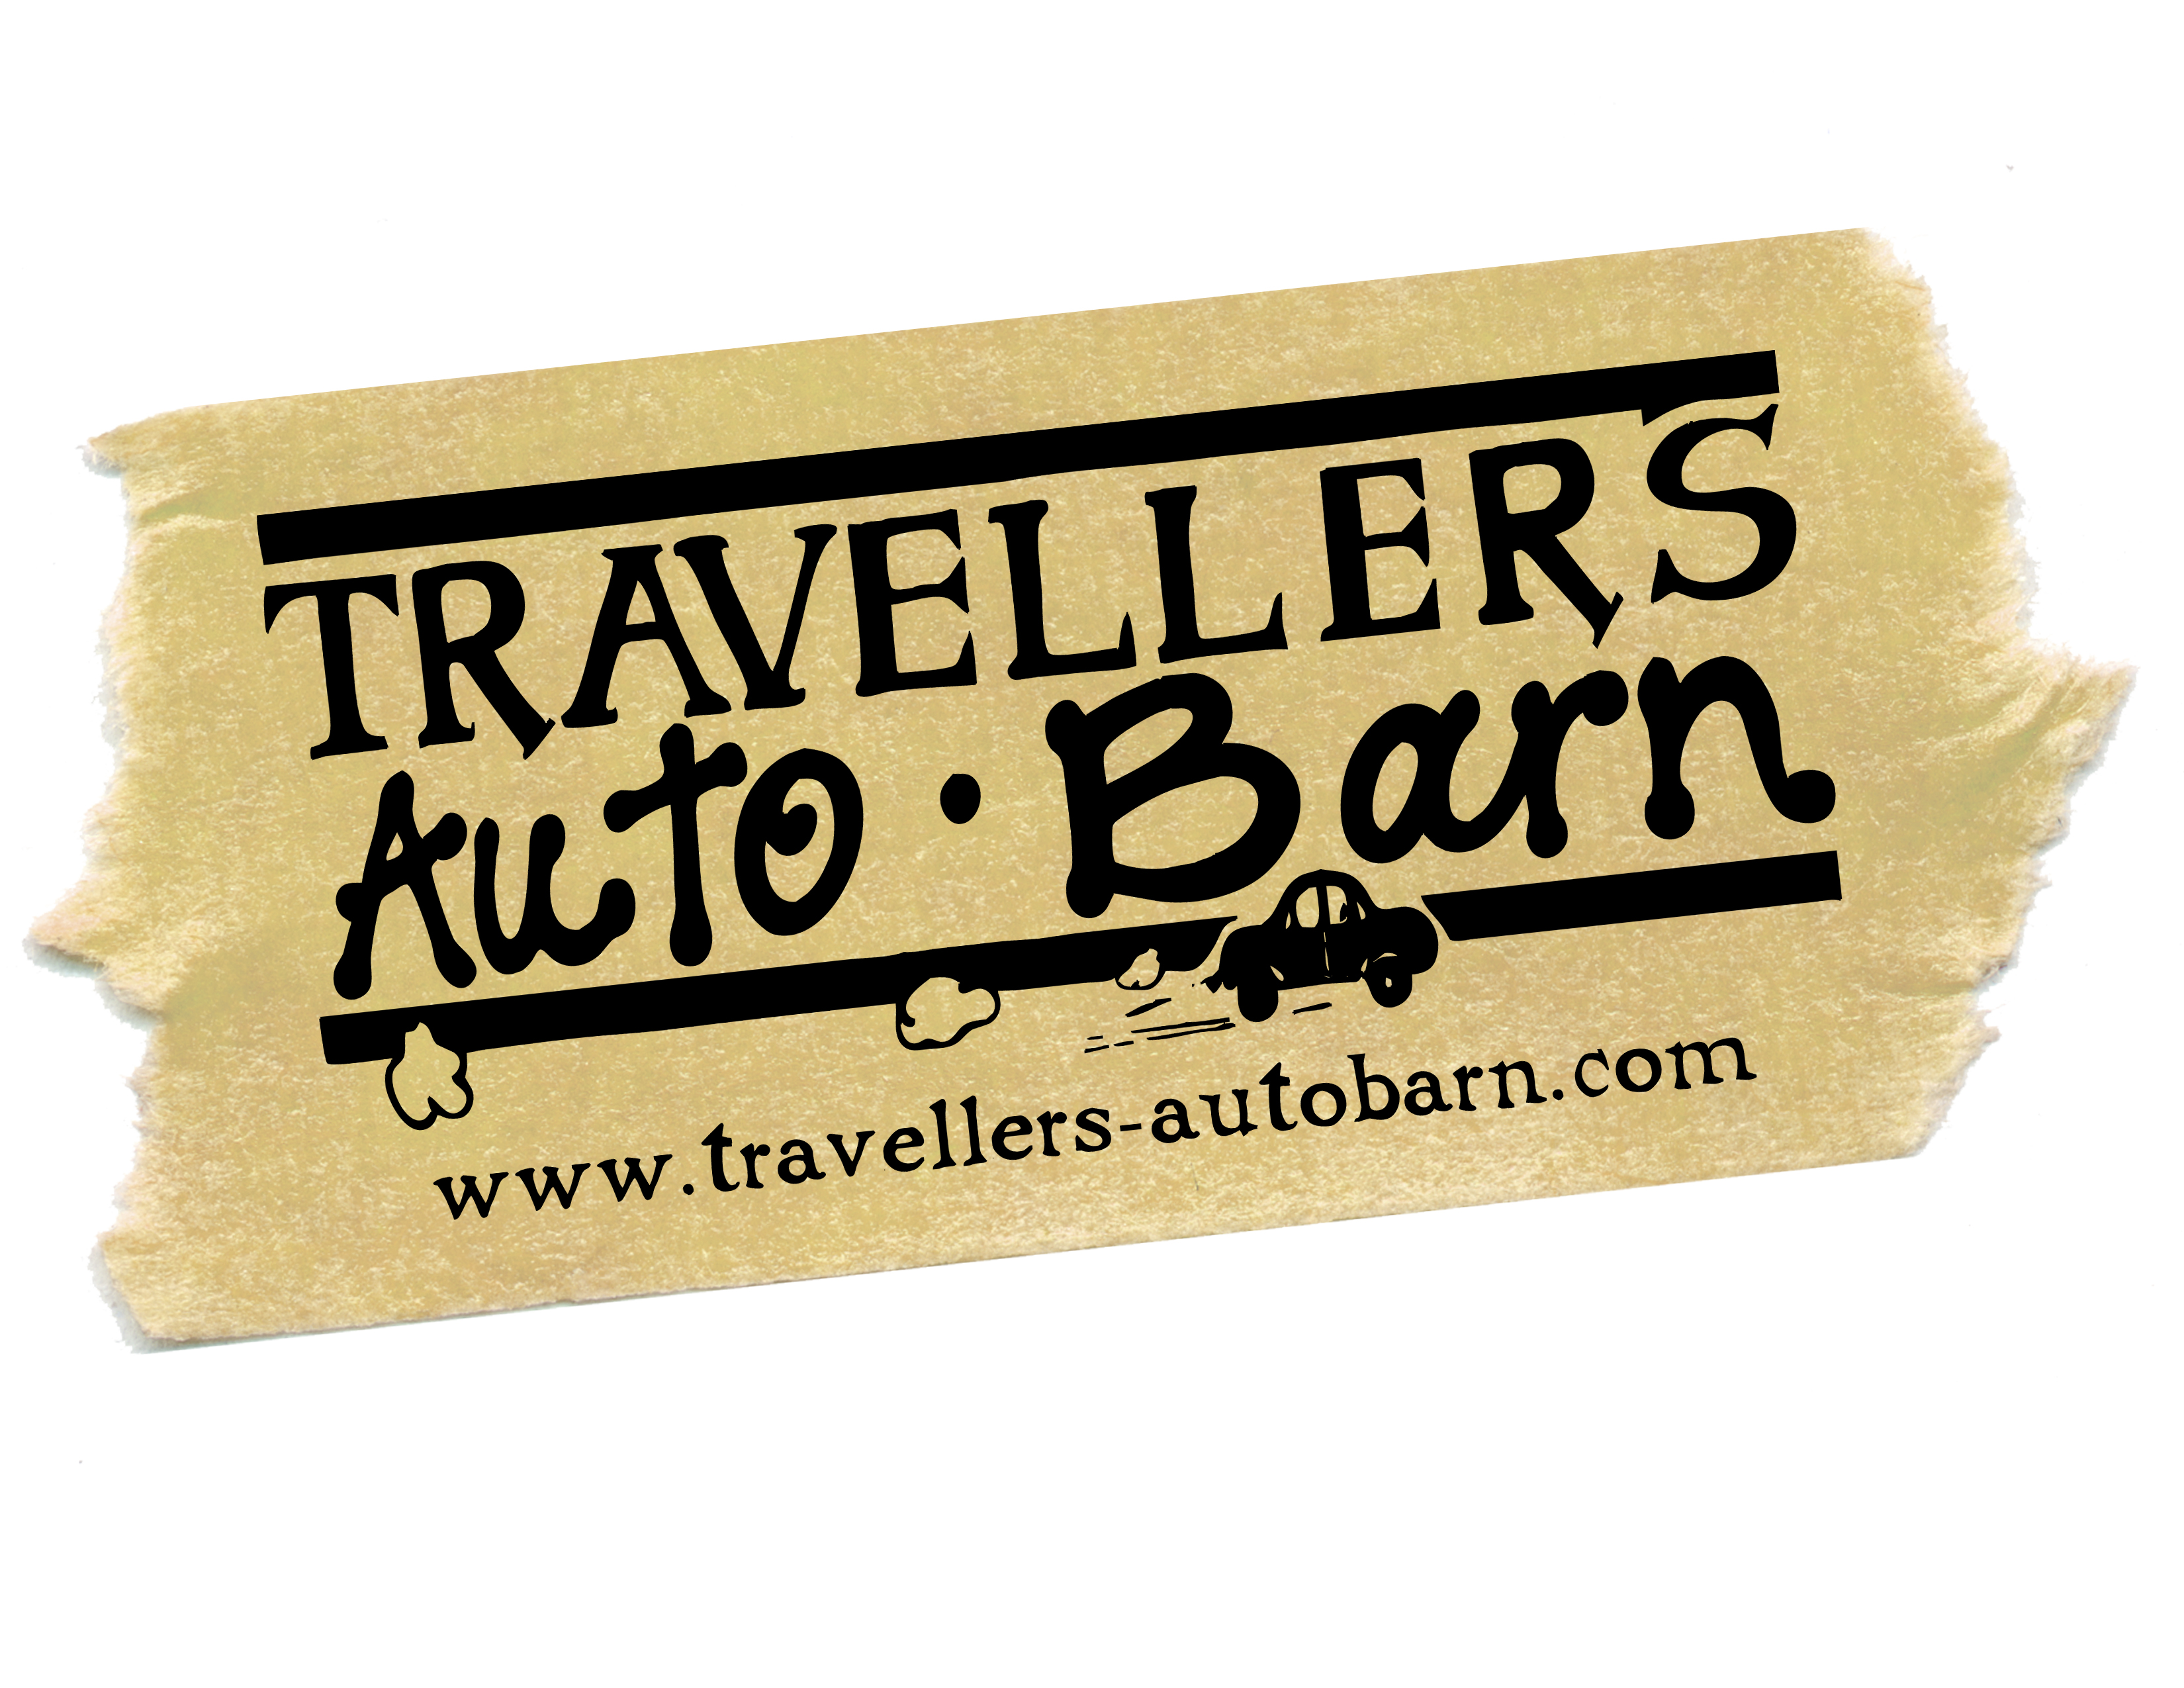 Travellers Autobarn